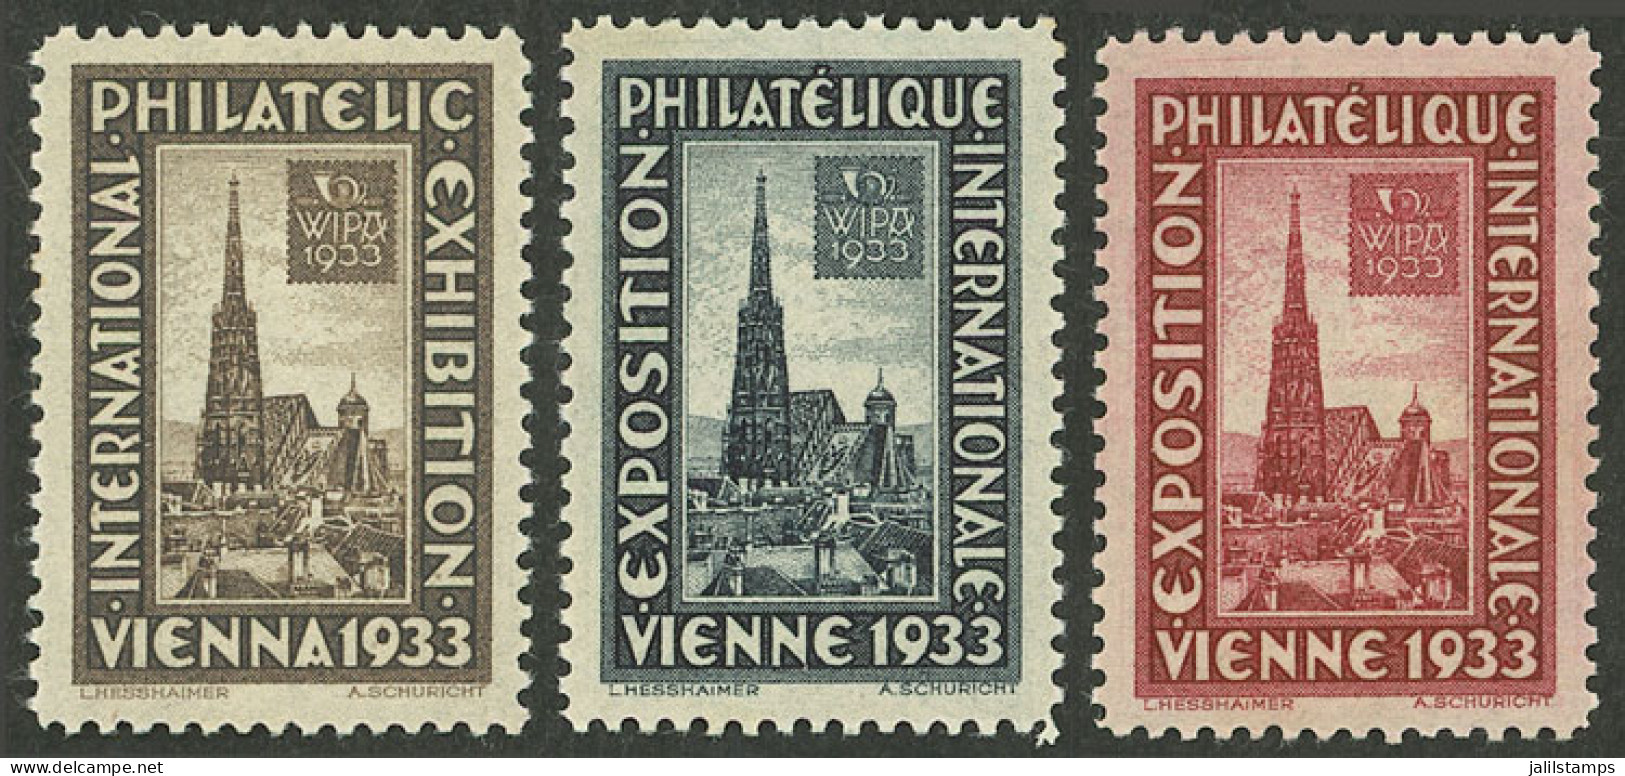 AUSTRIA: 1933 Vienna Philatelic Exposition (WIPA), 3 Beautiful Cinderellas In French, Excellent Quality! - Erinofilia